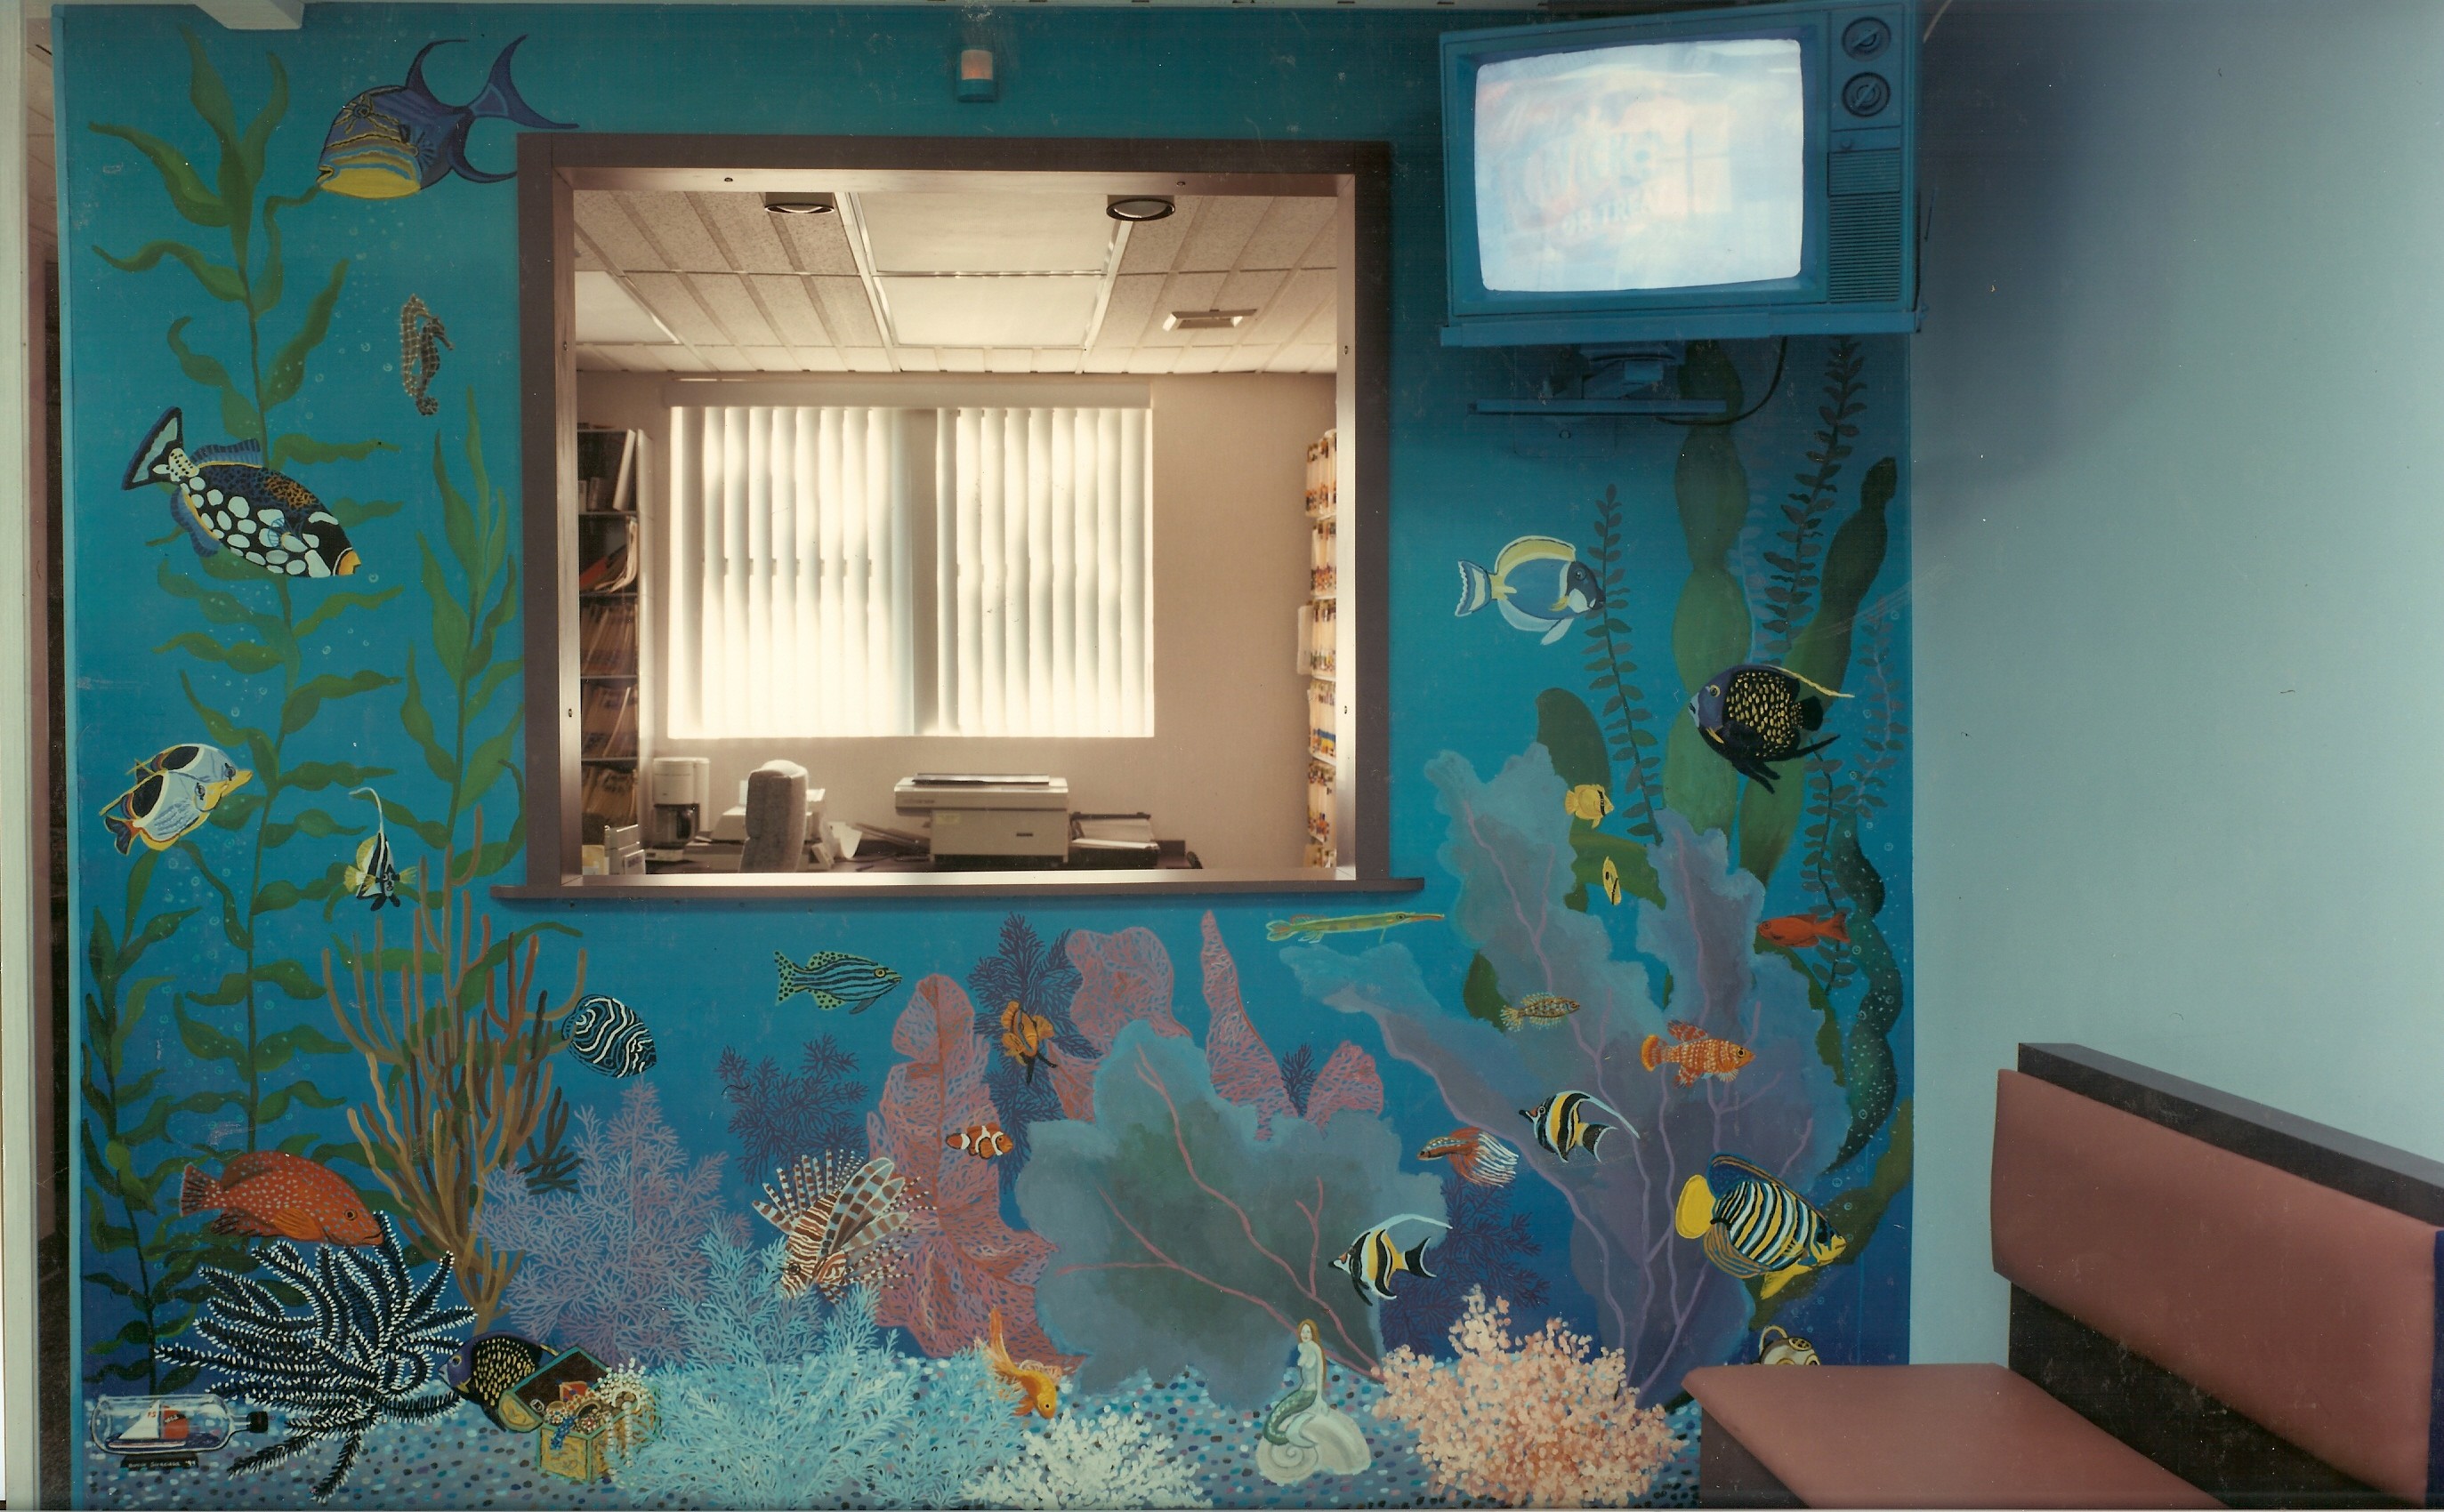 Aquarium mural for Dr. Meyers office.